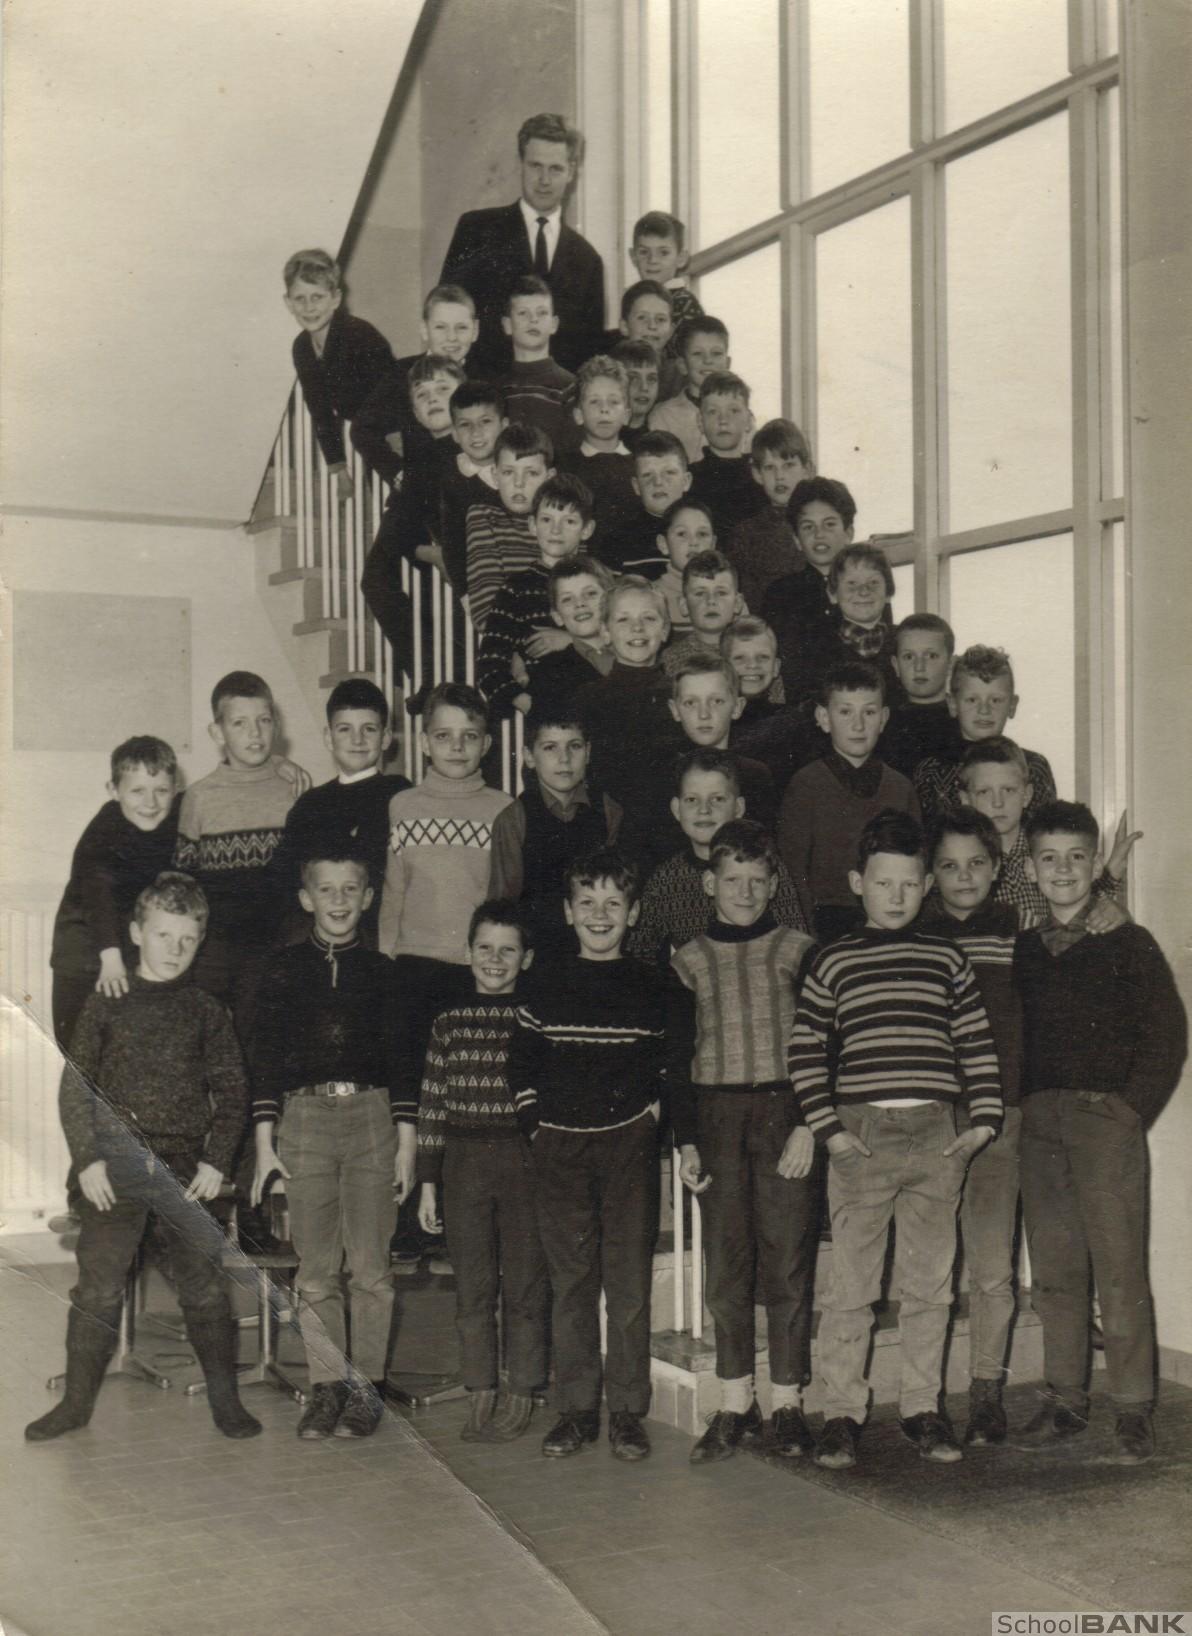 Rooms Katholieke Basisschool 'Johannes de Doper' foto